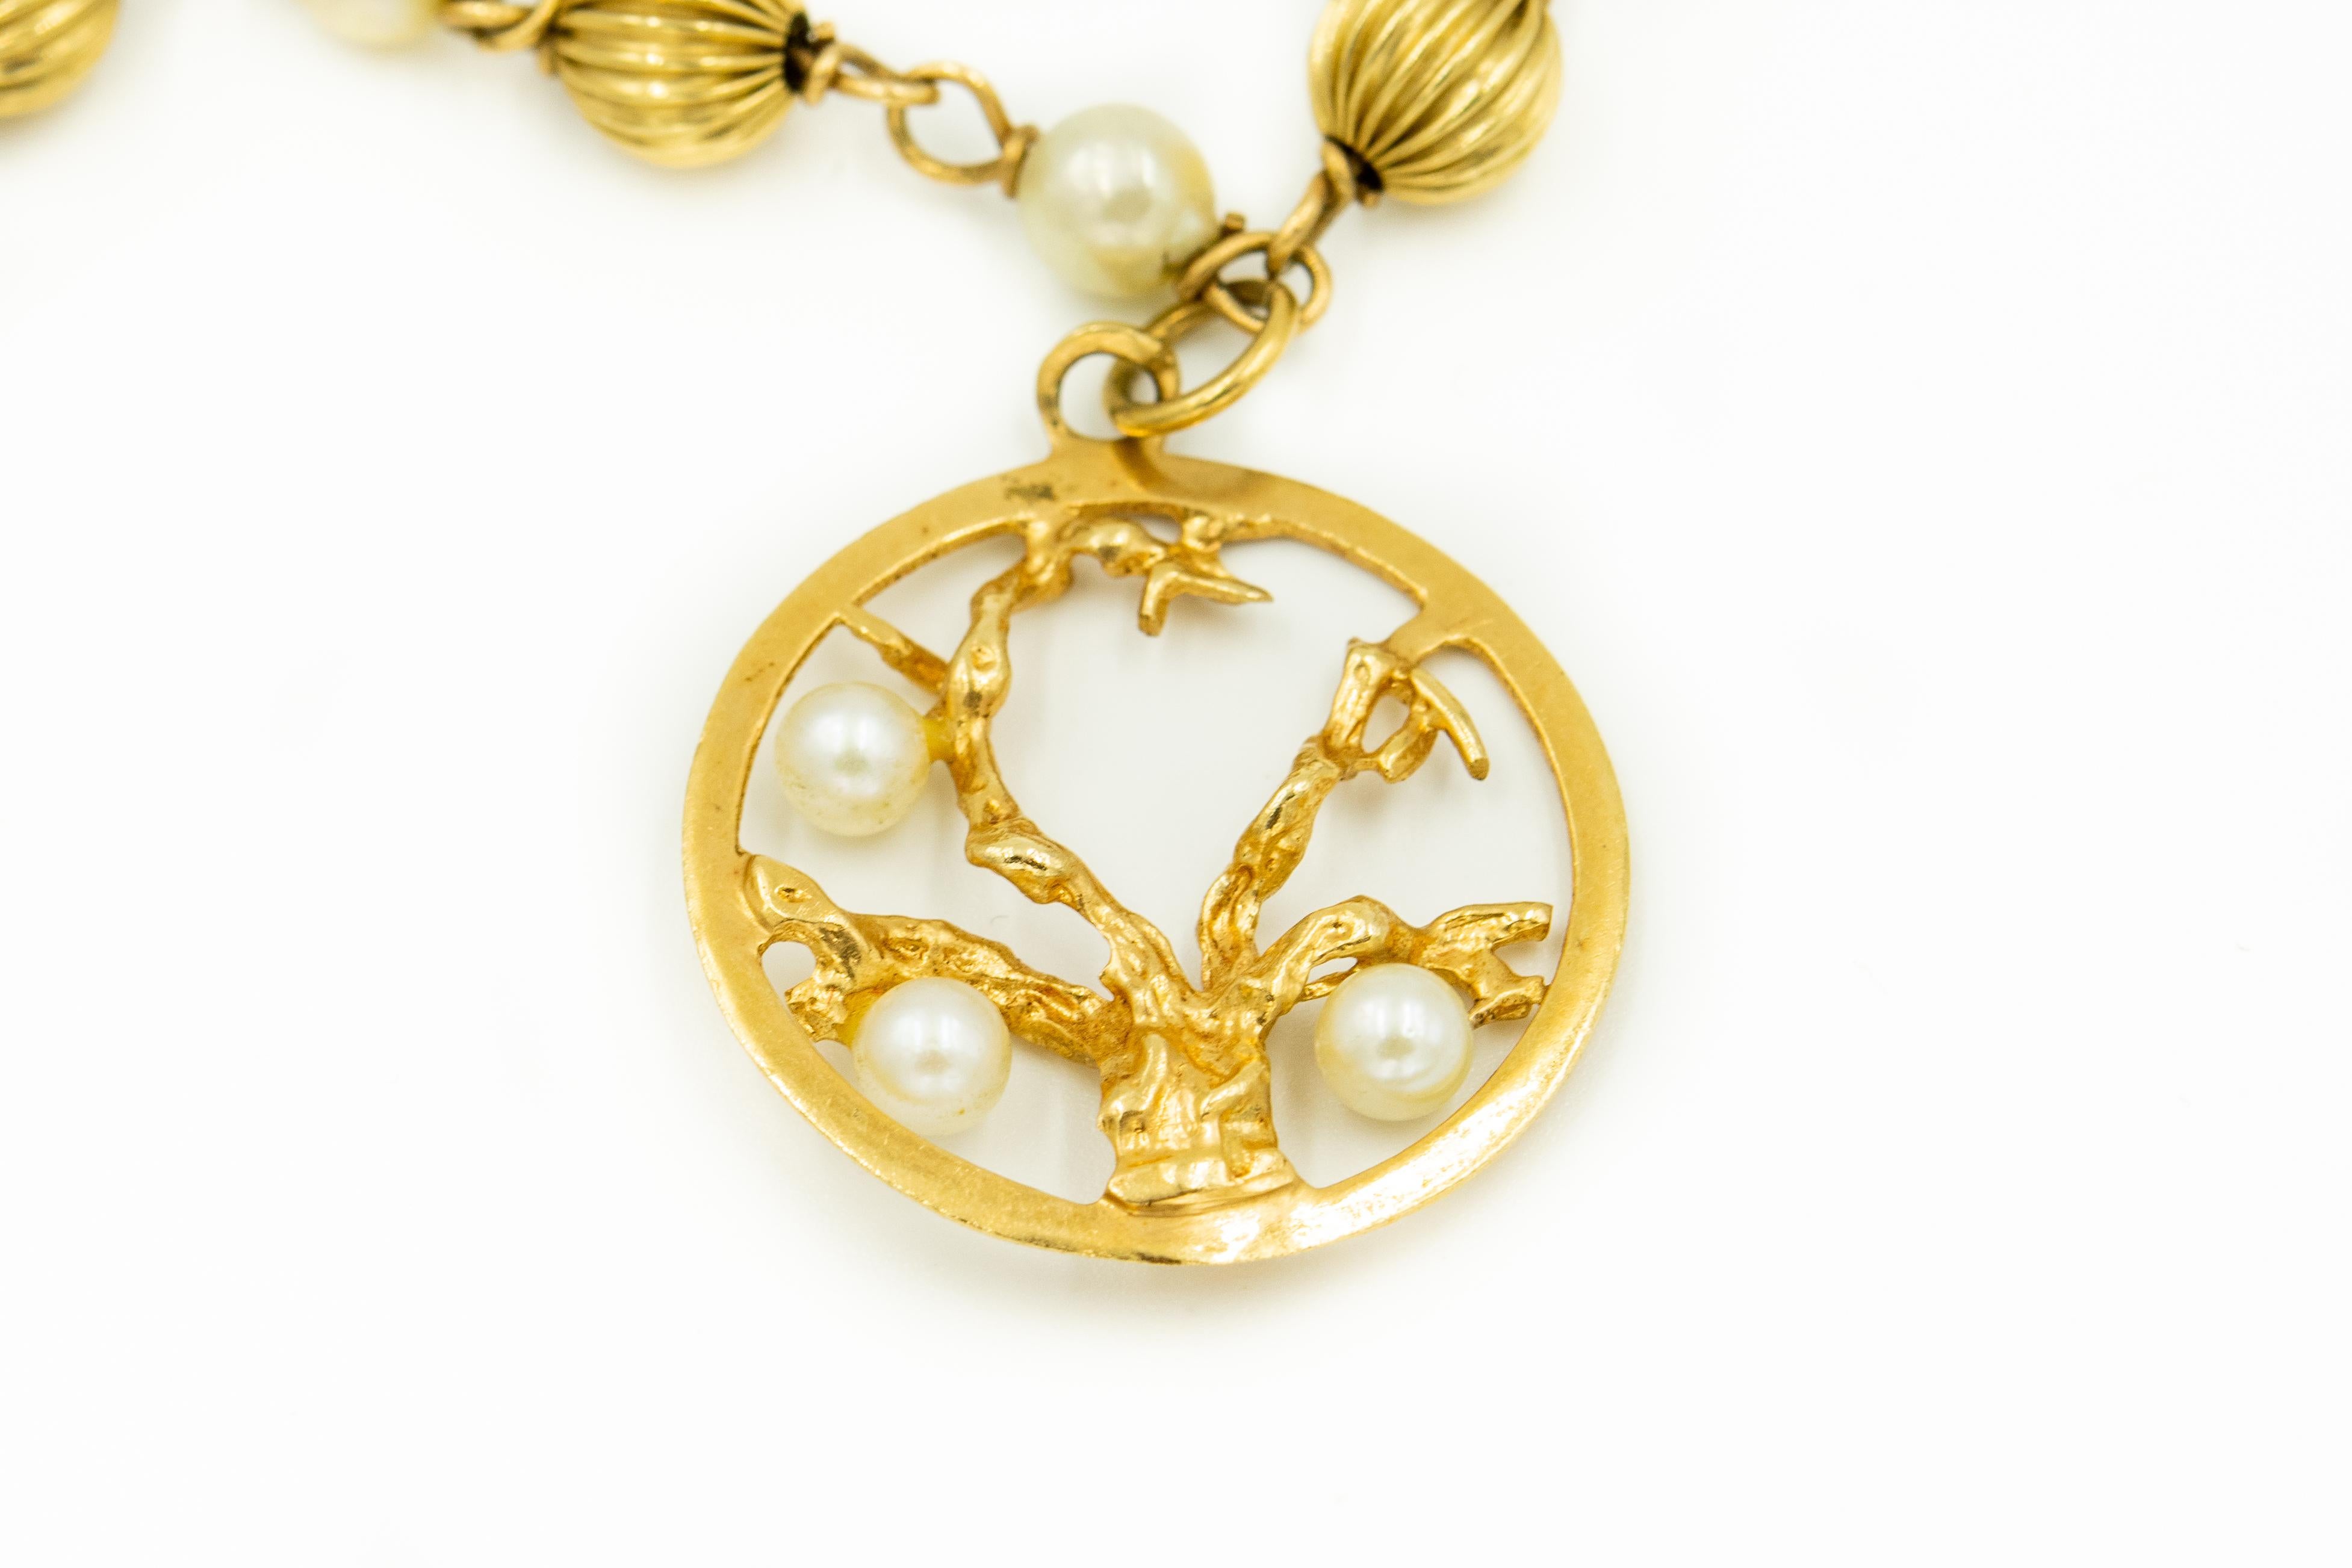 Women's Cultured Pearl 14 Karat Yellow Gold Charm Bracelet with Israel Liberata Medal